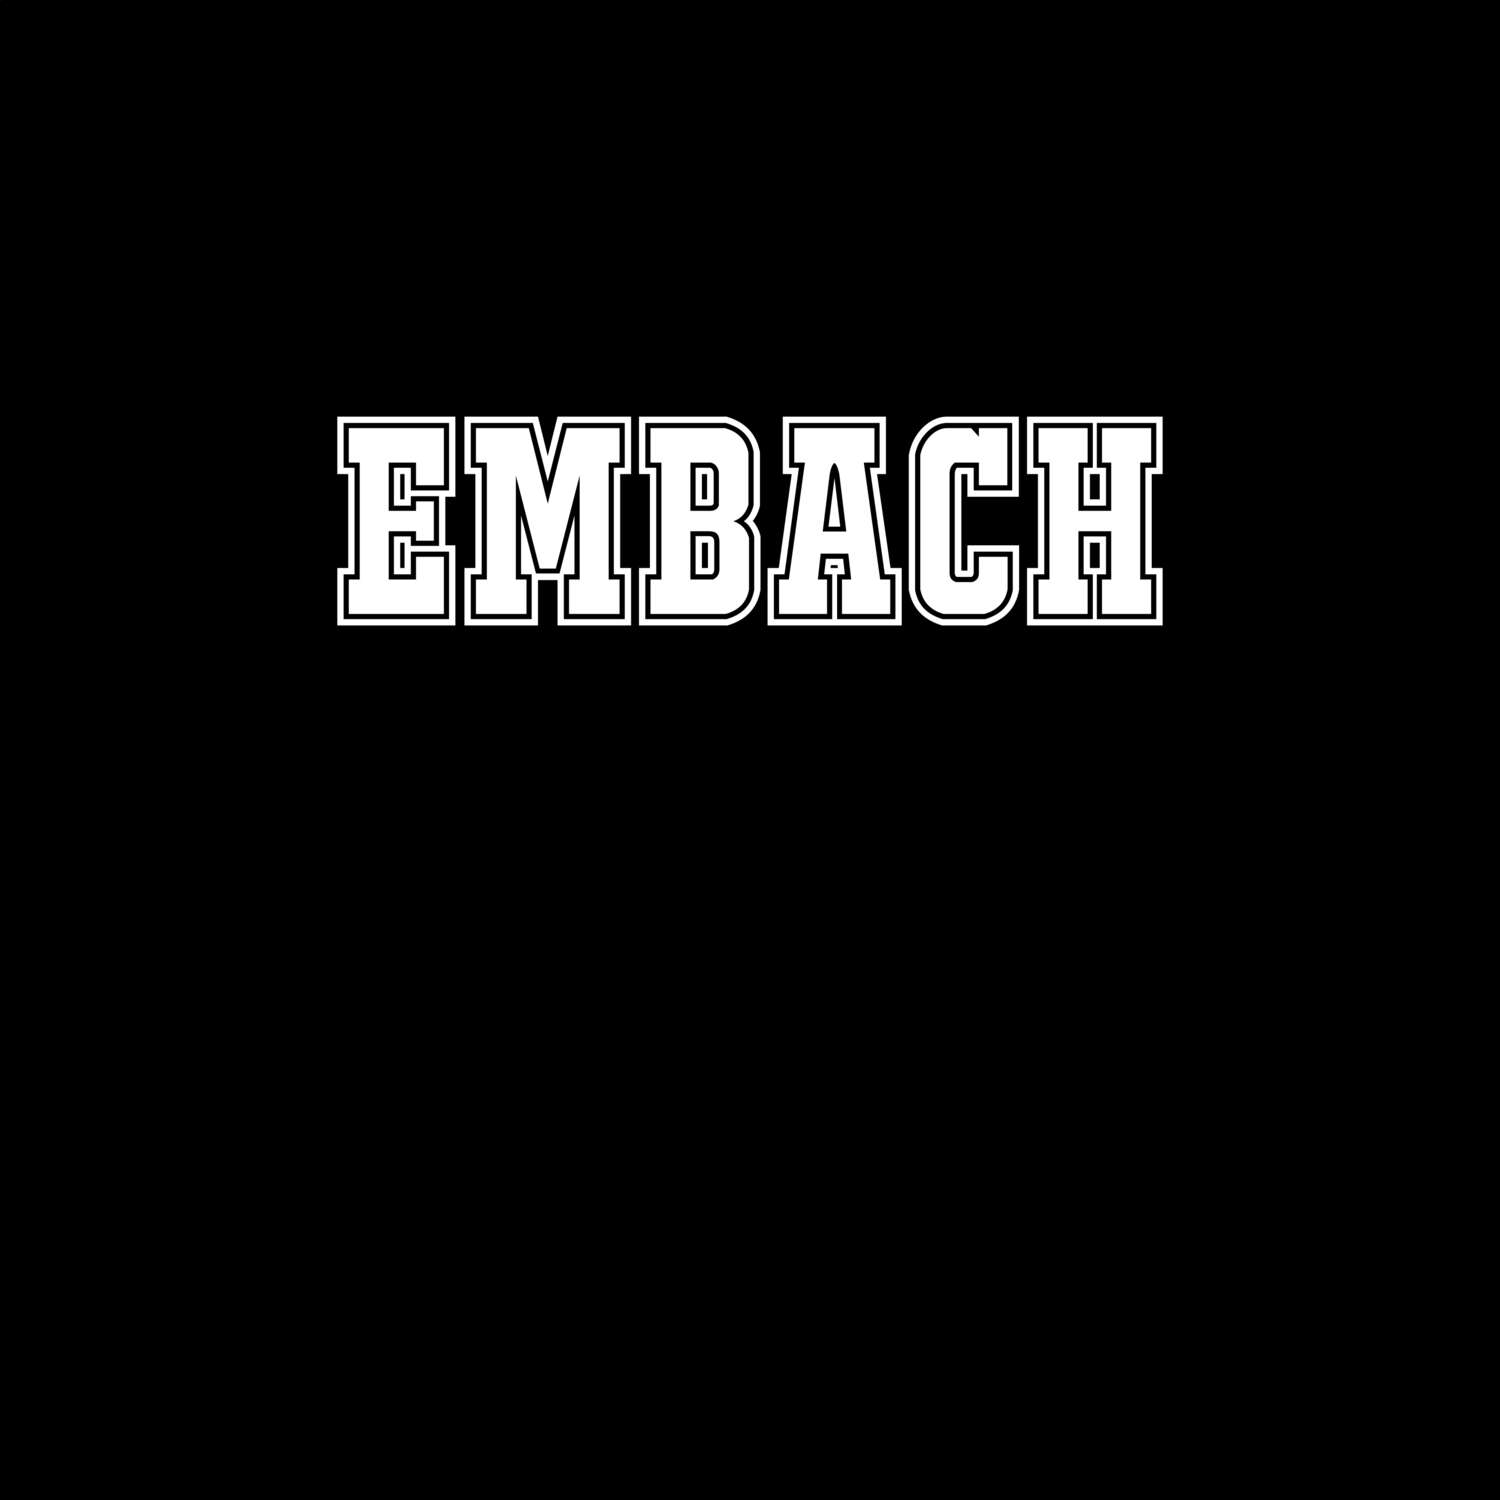 Embach T-Shirt »Classic«